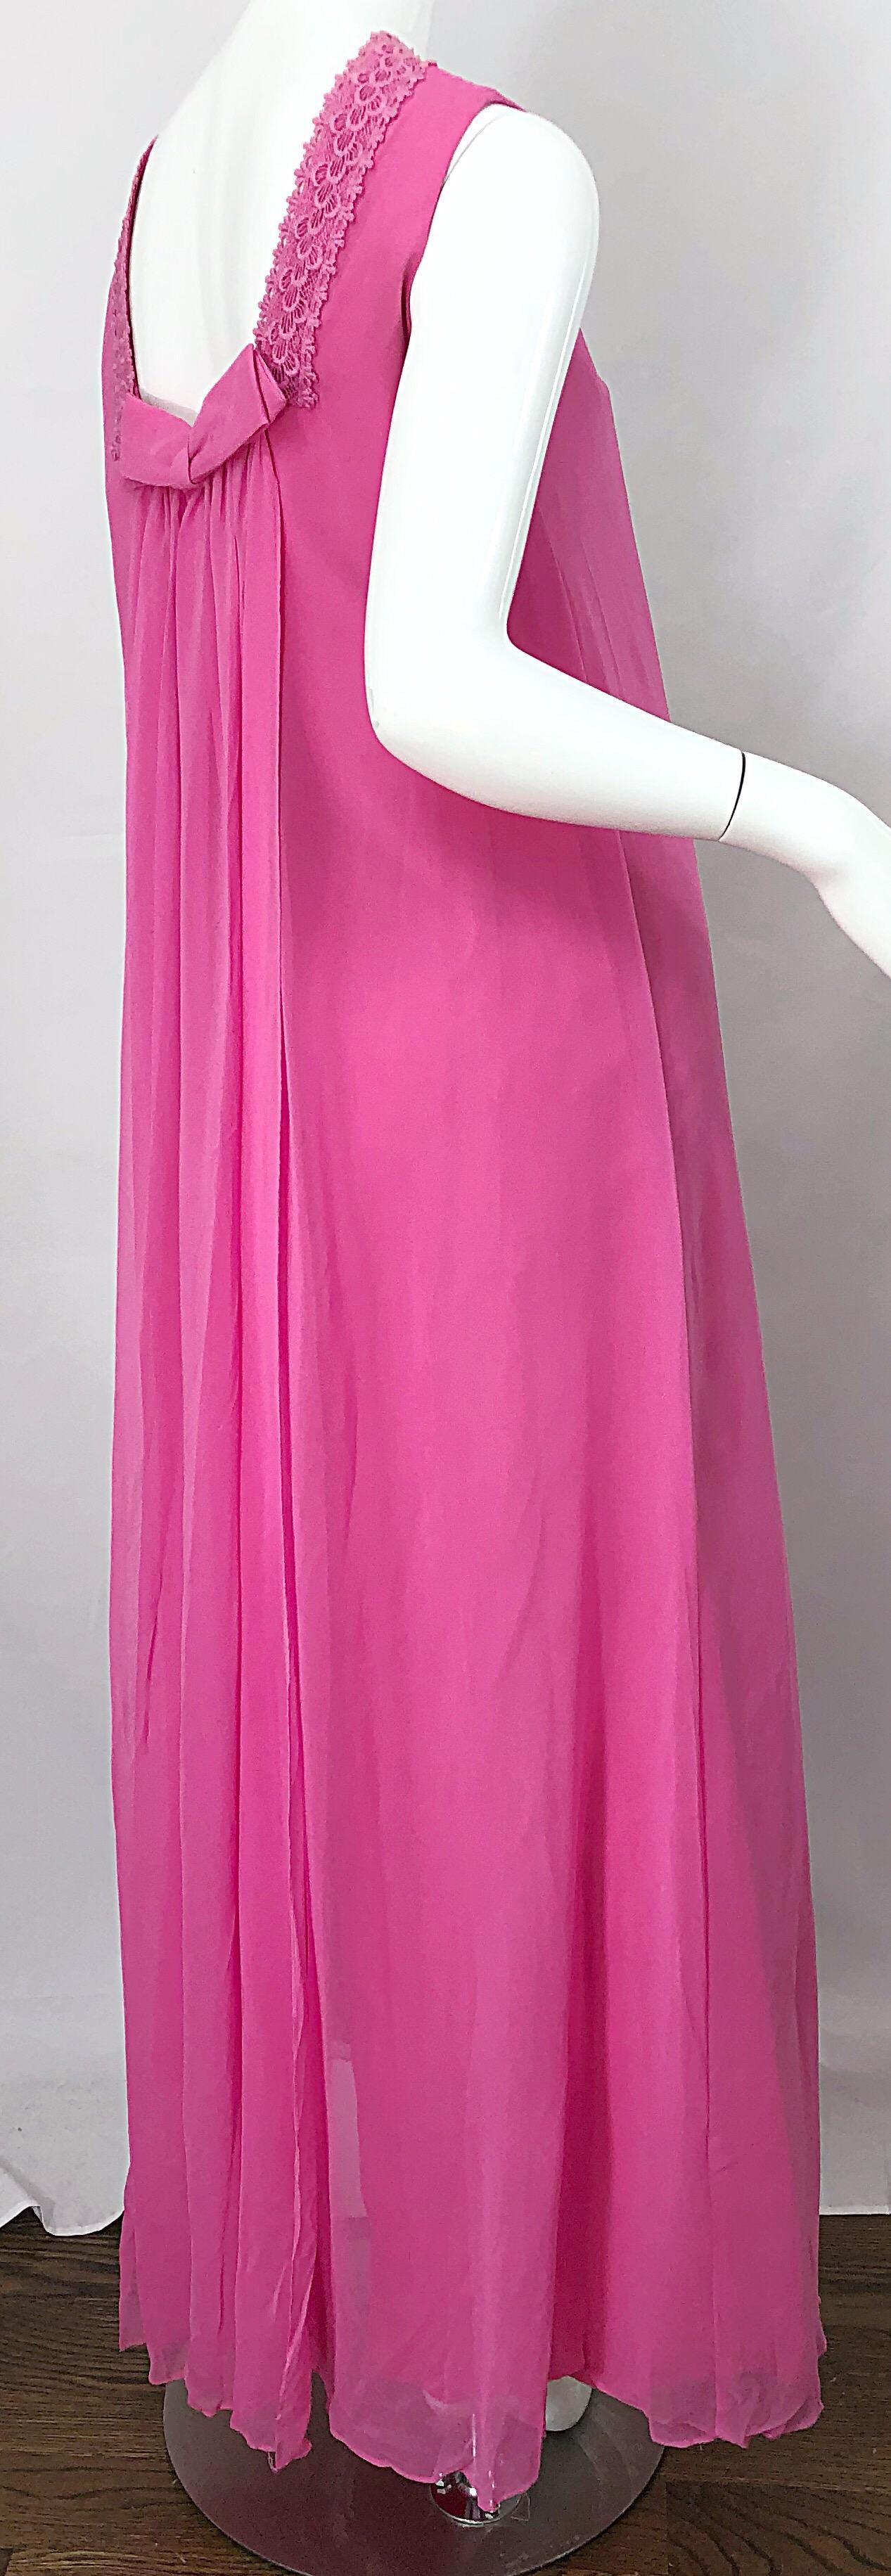 1960s Bubblegum Pink Silk Chiffon High Neck Demi Couture Vintage 60s Gown Dress For Sale 2